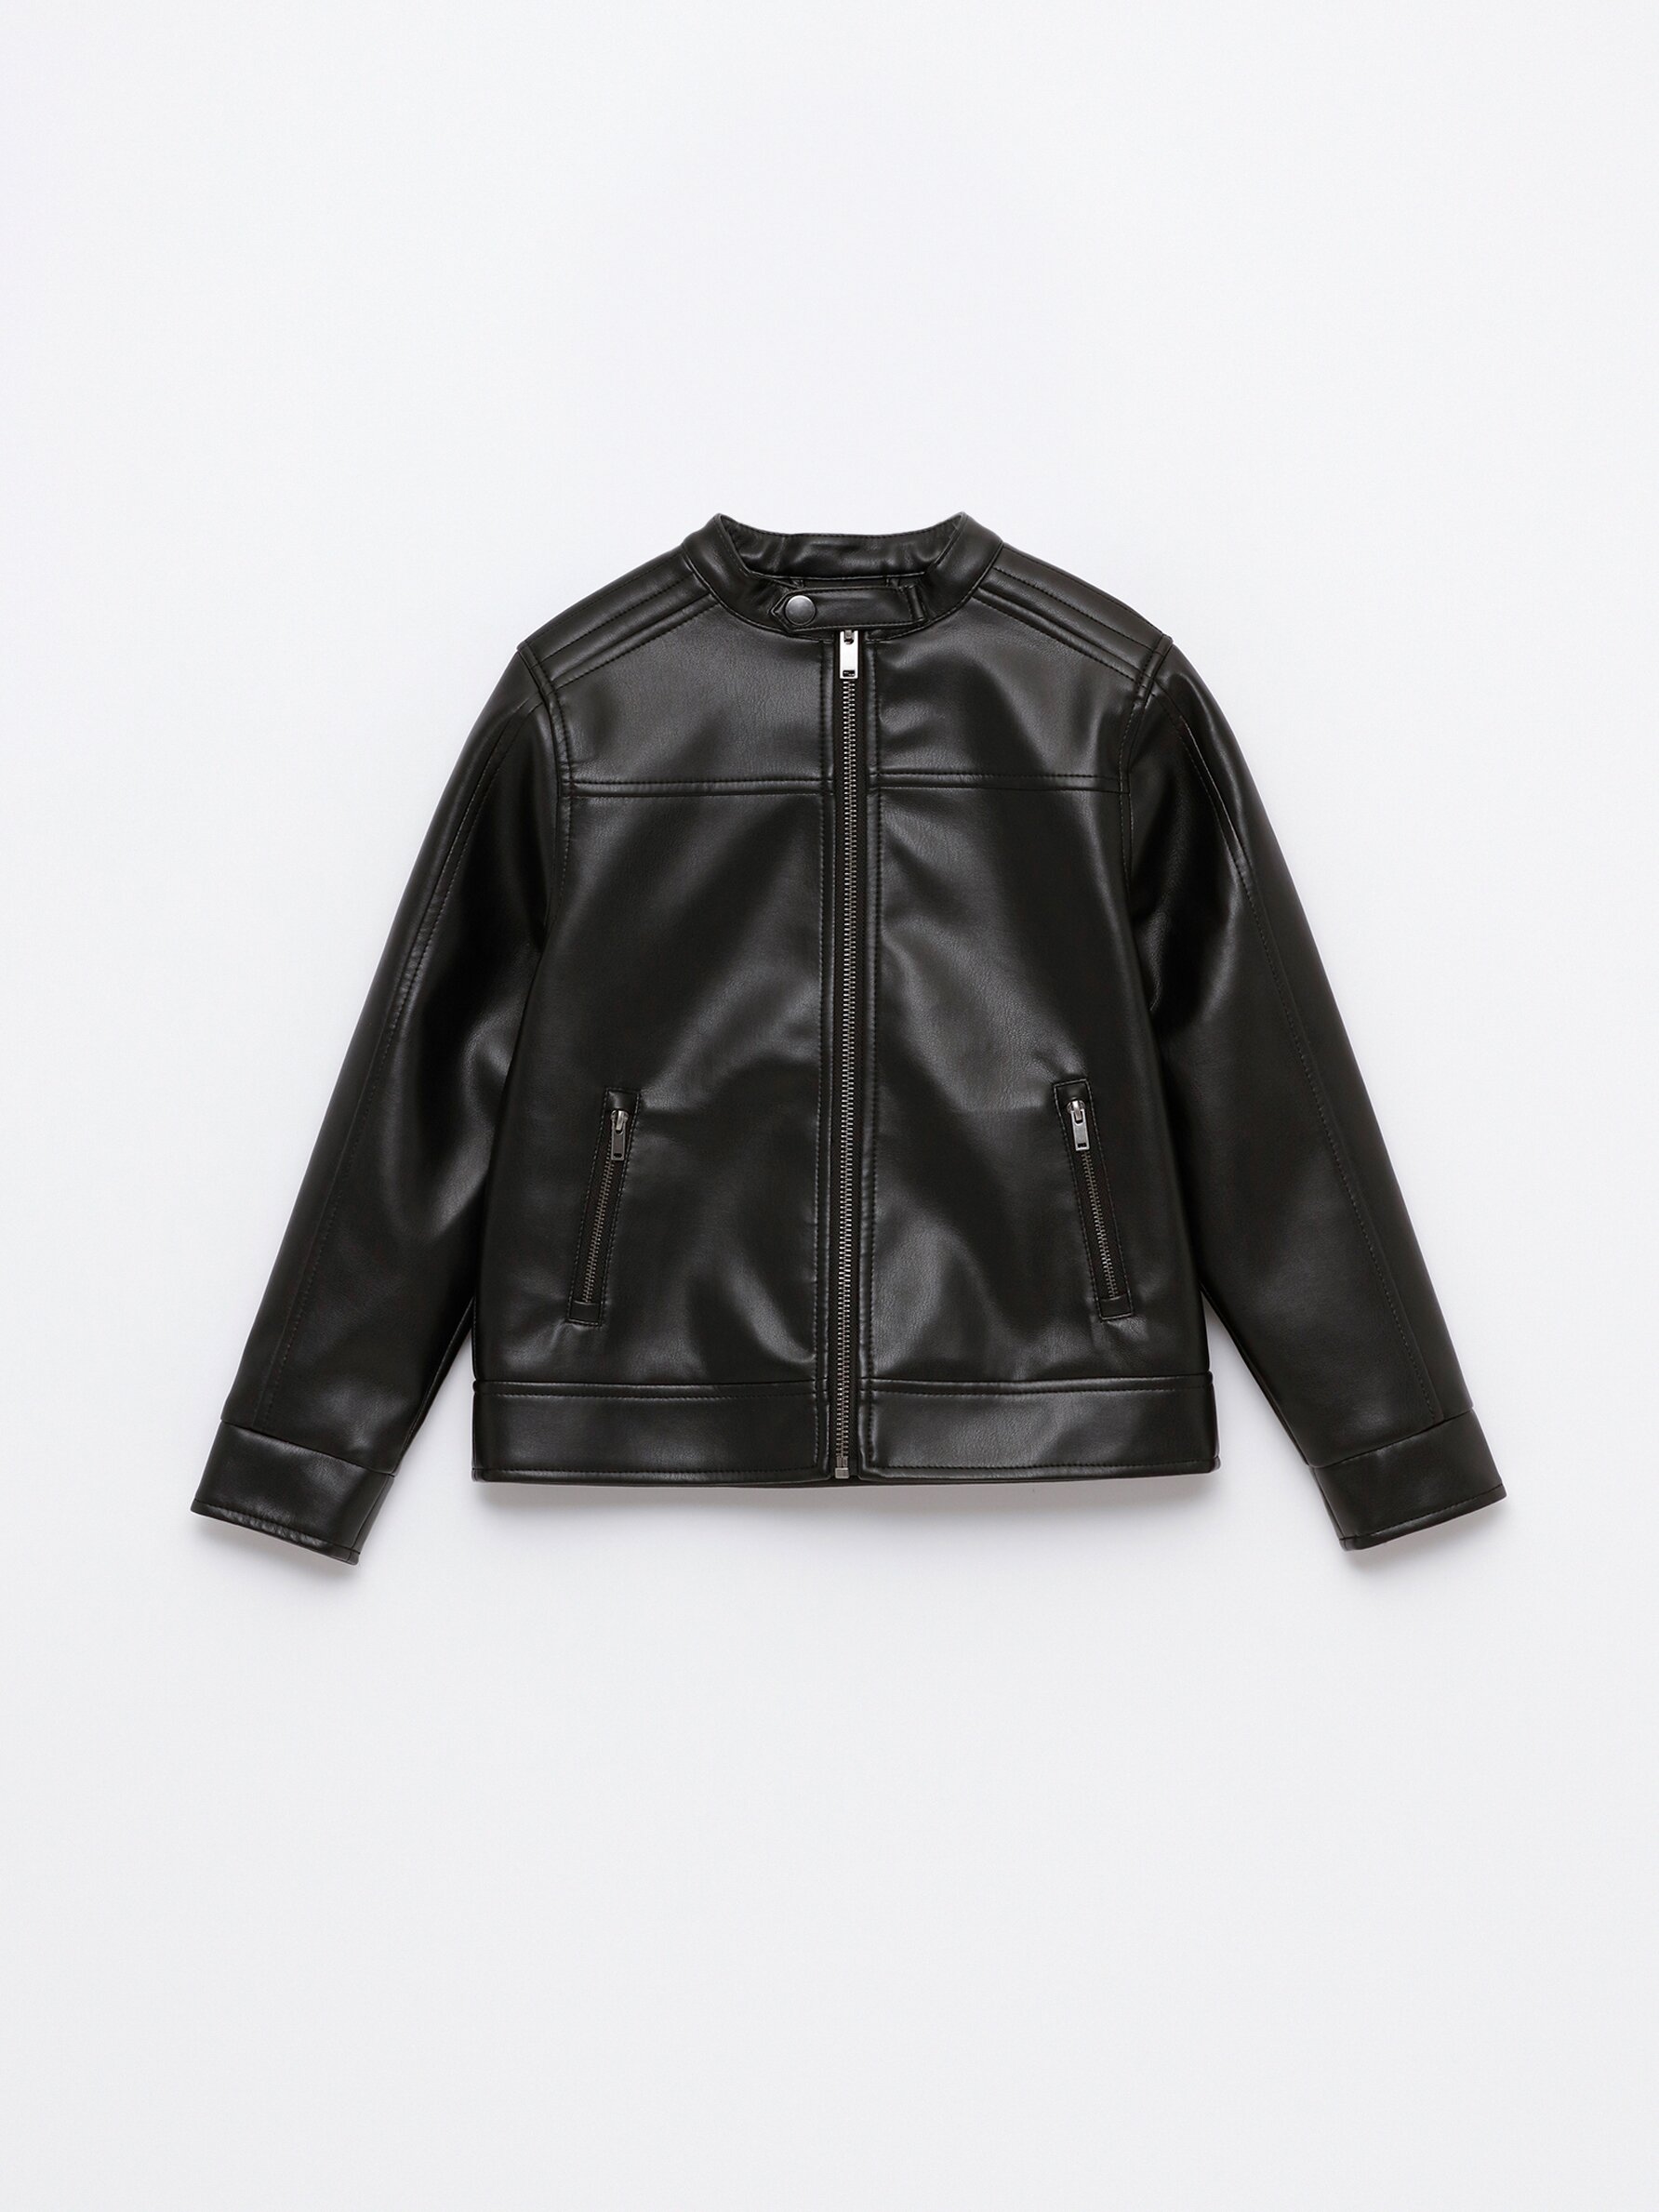 Buy Bareskin Men Side Zip Green Black Color Genuine Leather Jacket at  Amazon.in